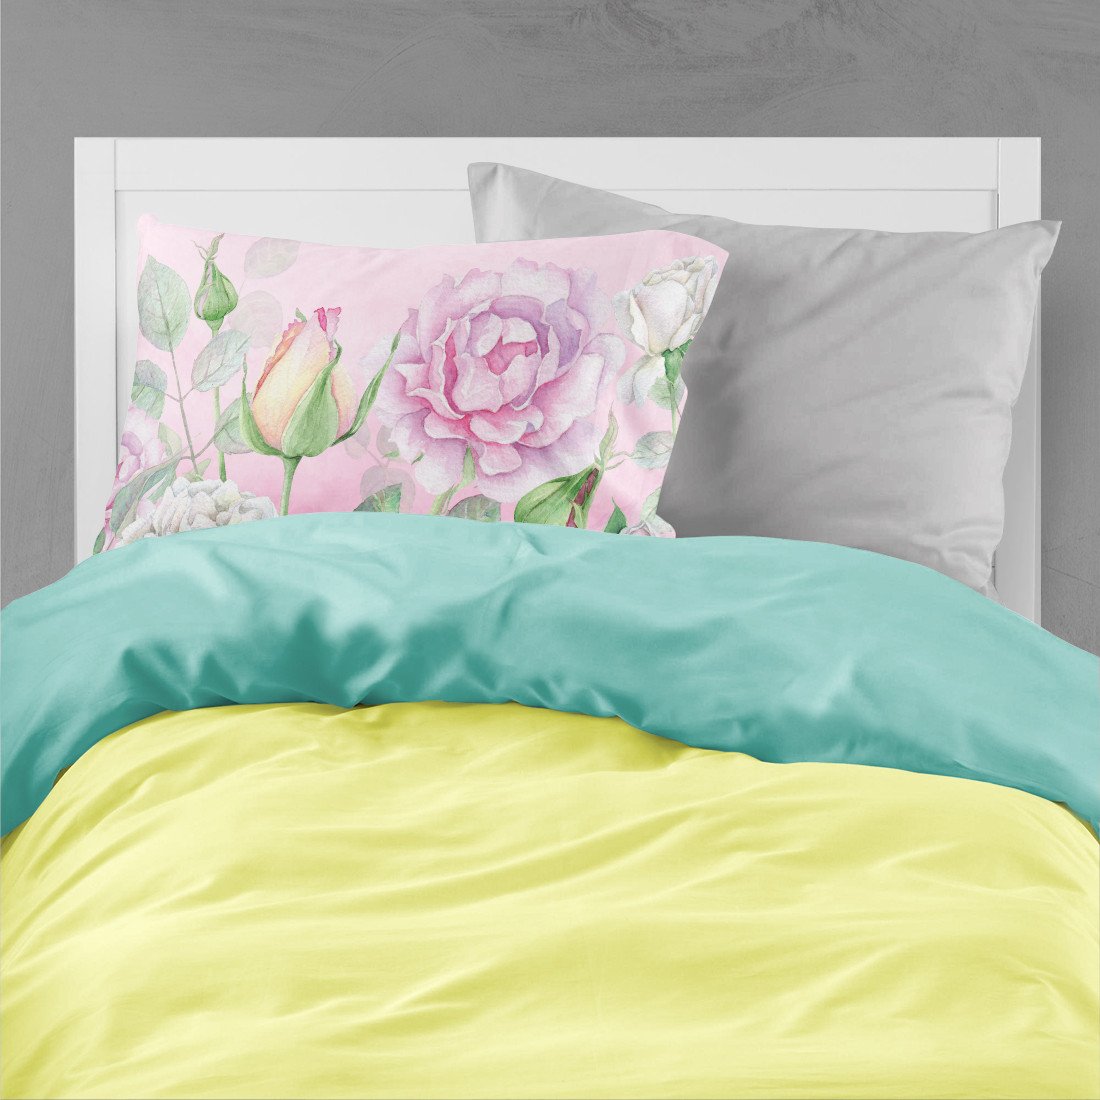 Rose Garden Fabric Standard Pillowcase BB7447PILLOWCASE by Caroline's Treasures